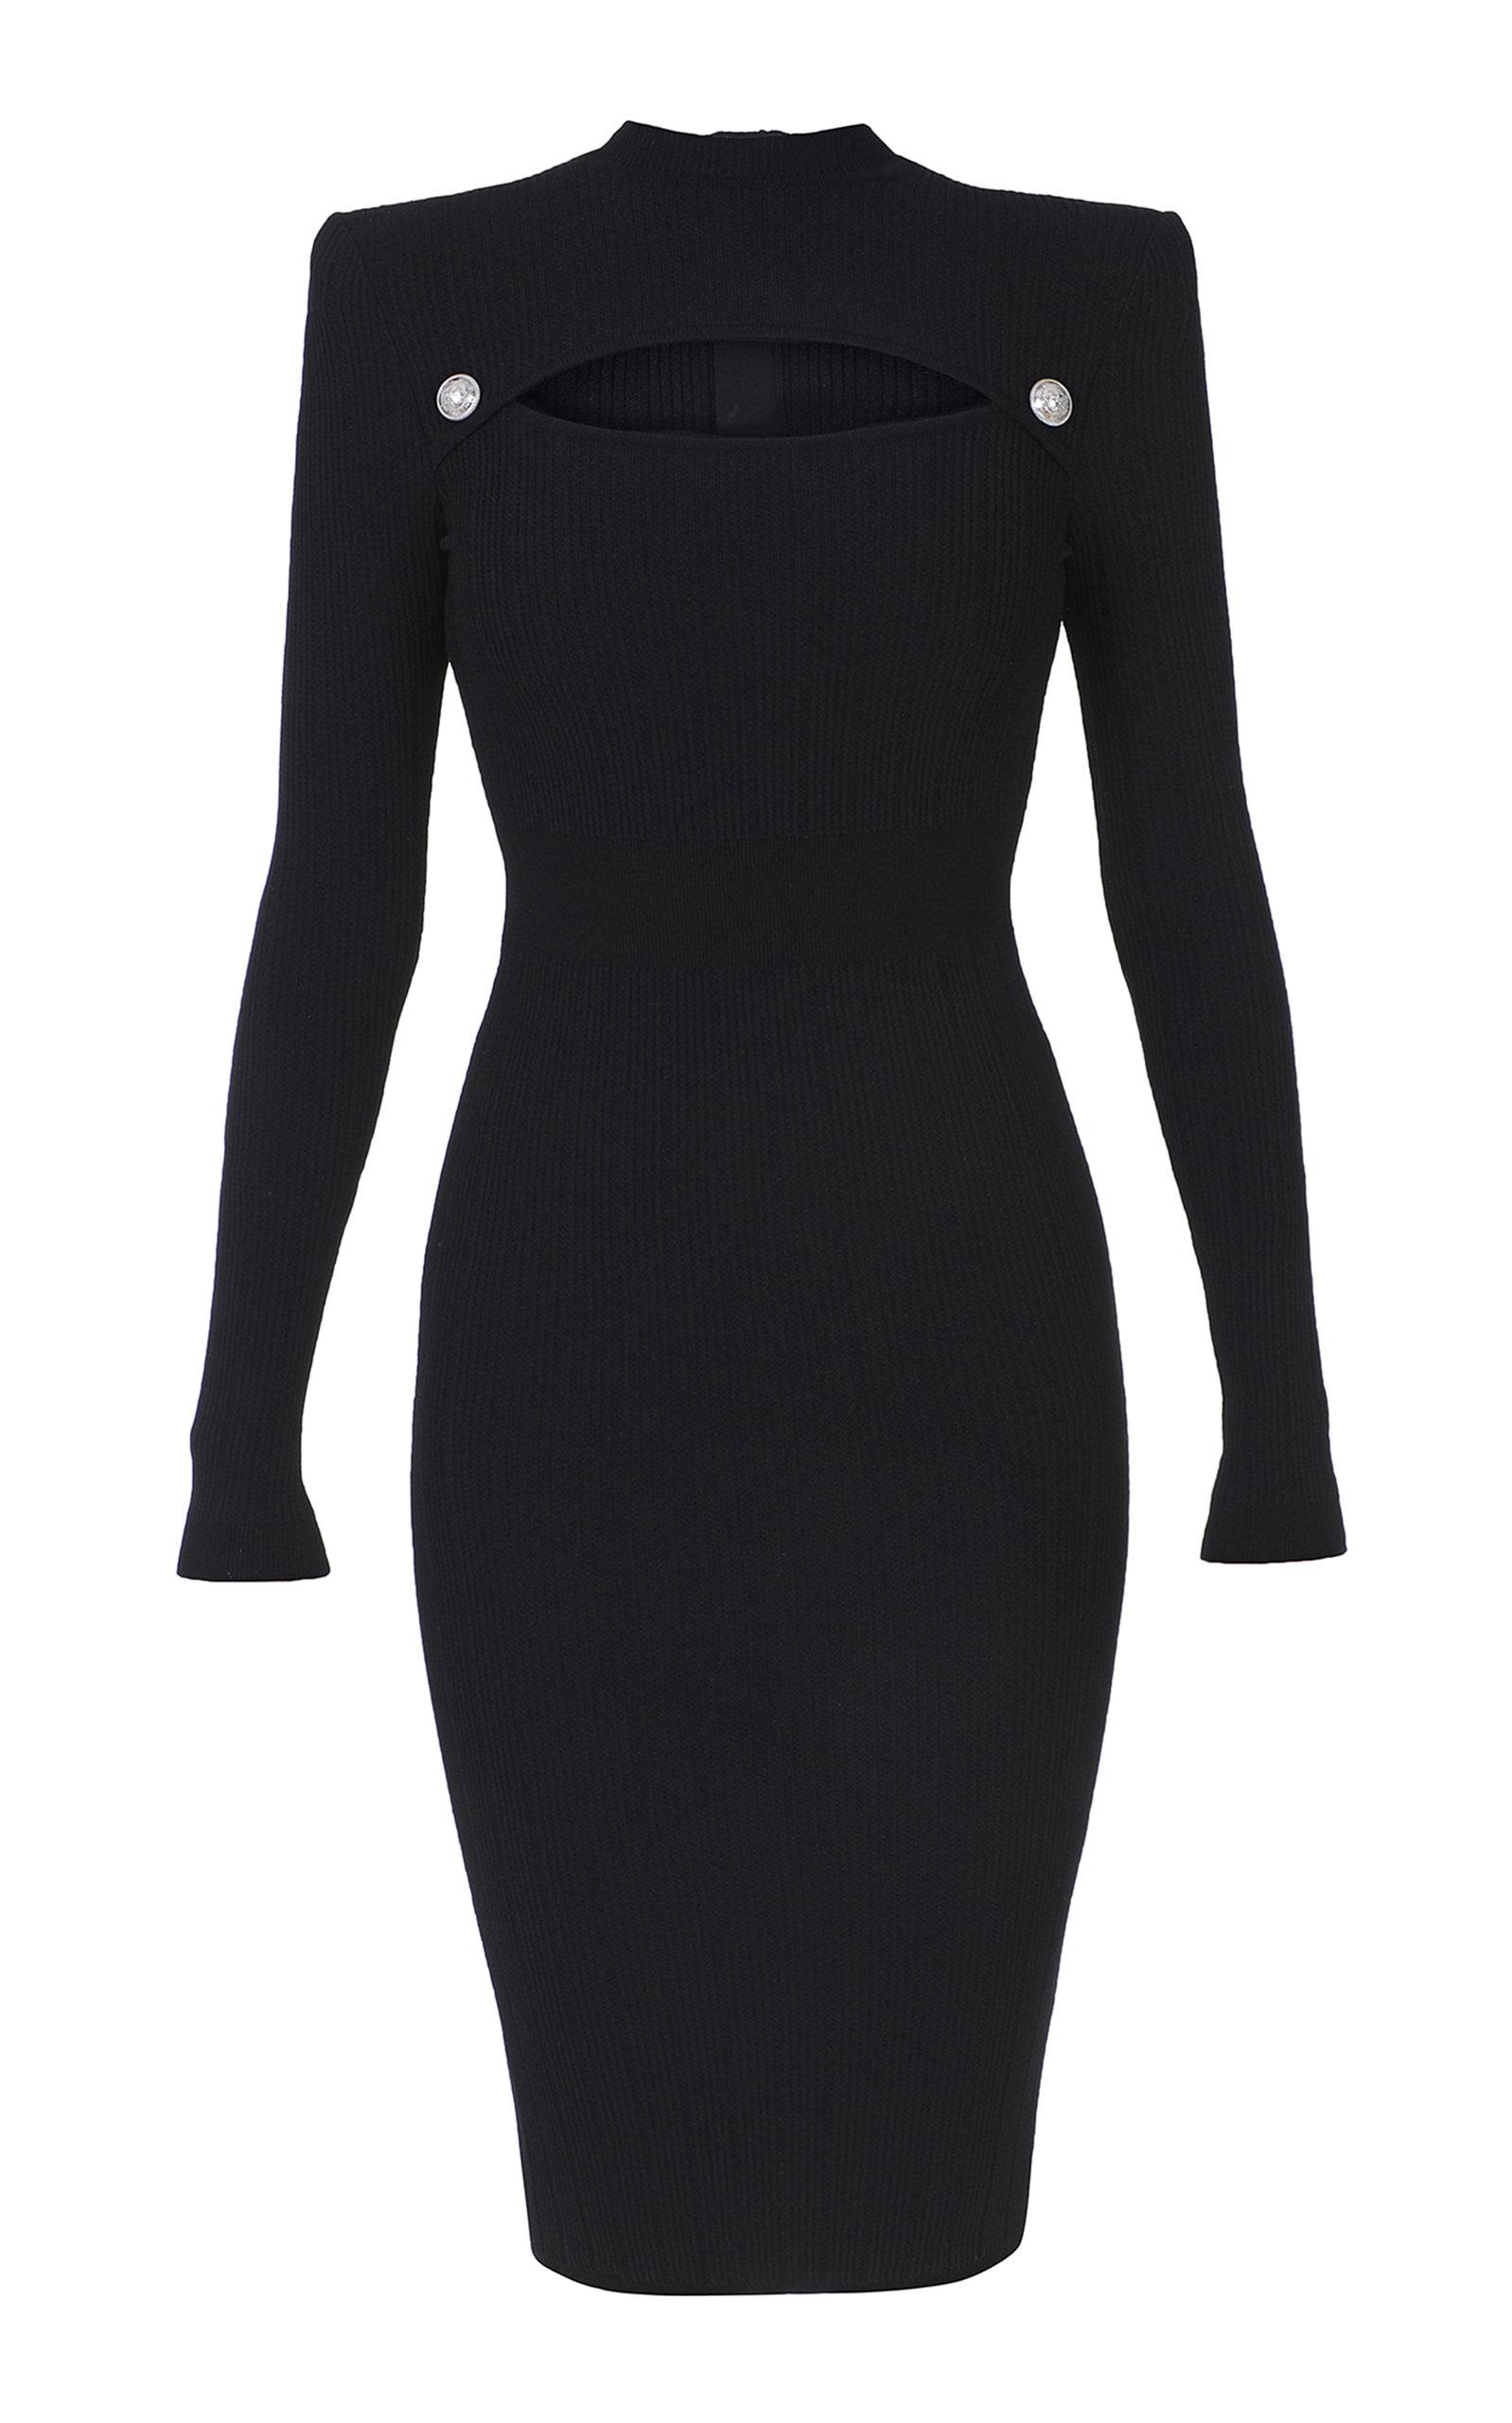 Balmain Long Sleeve Cutout Knit Mock Neck Midi Dress in Black - Lyst